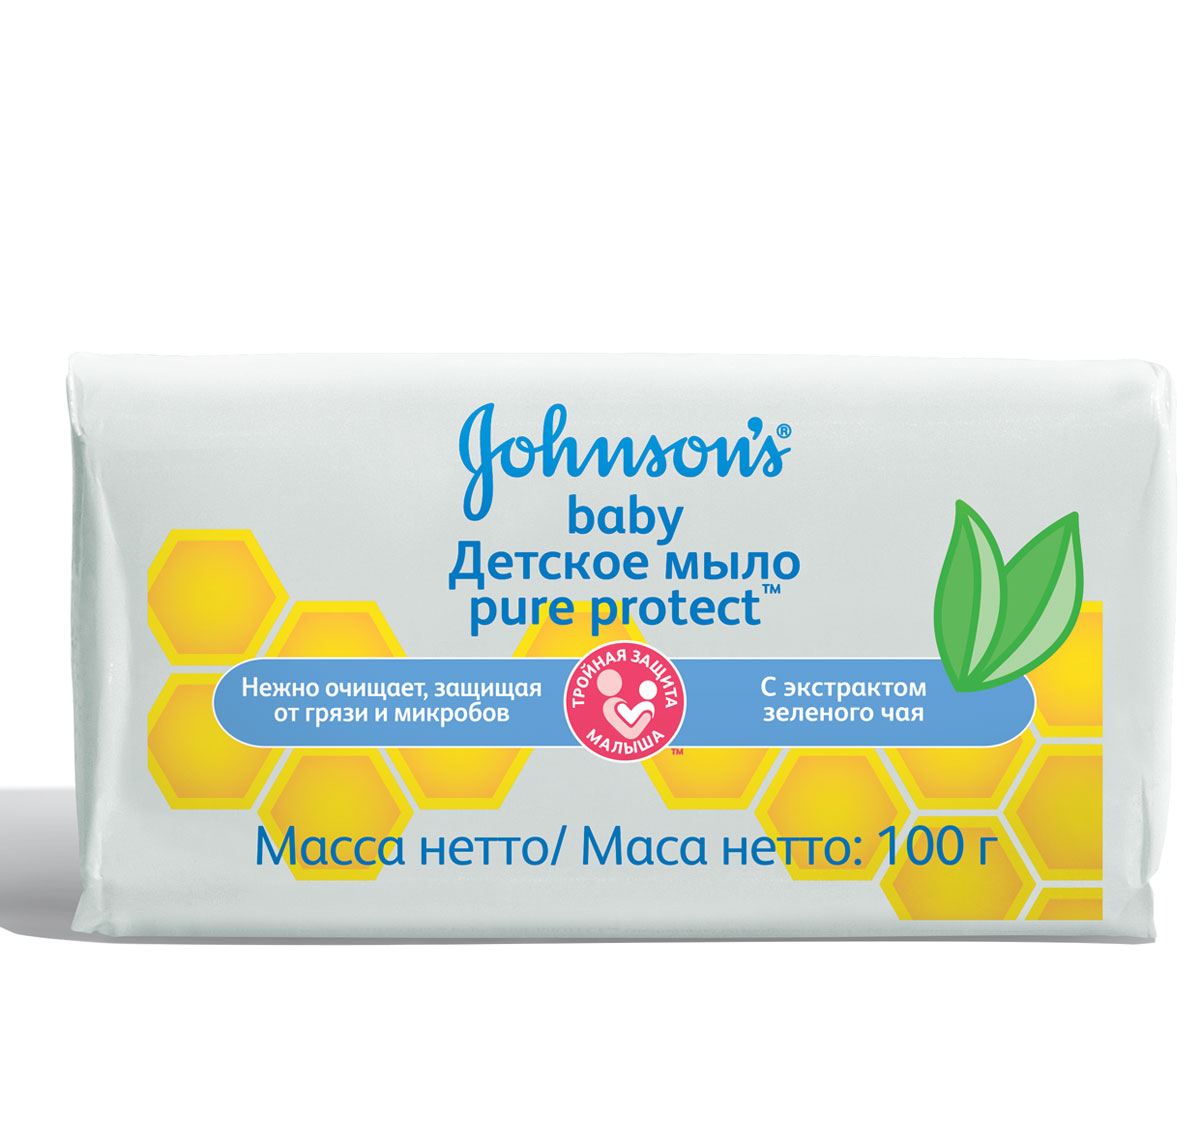 Johnsons baby Pure Protect   100  - Johnsons baby3014970   JOHNSON